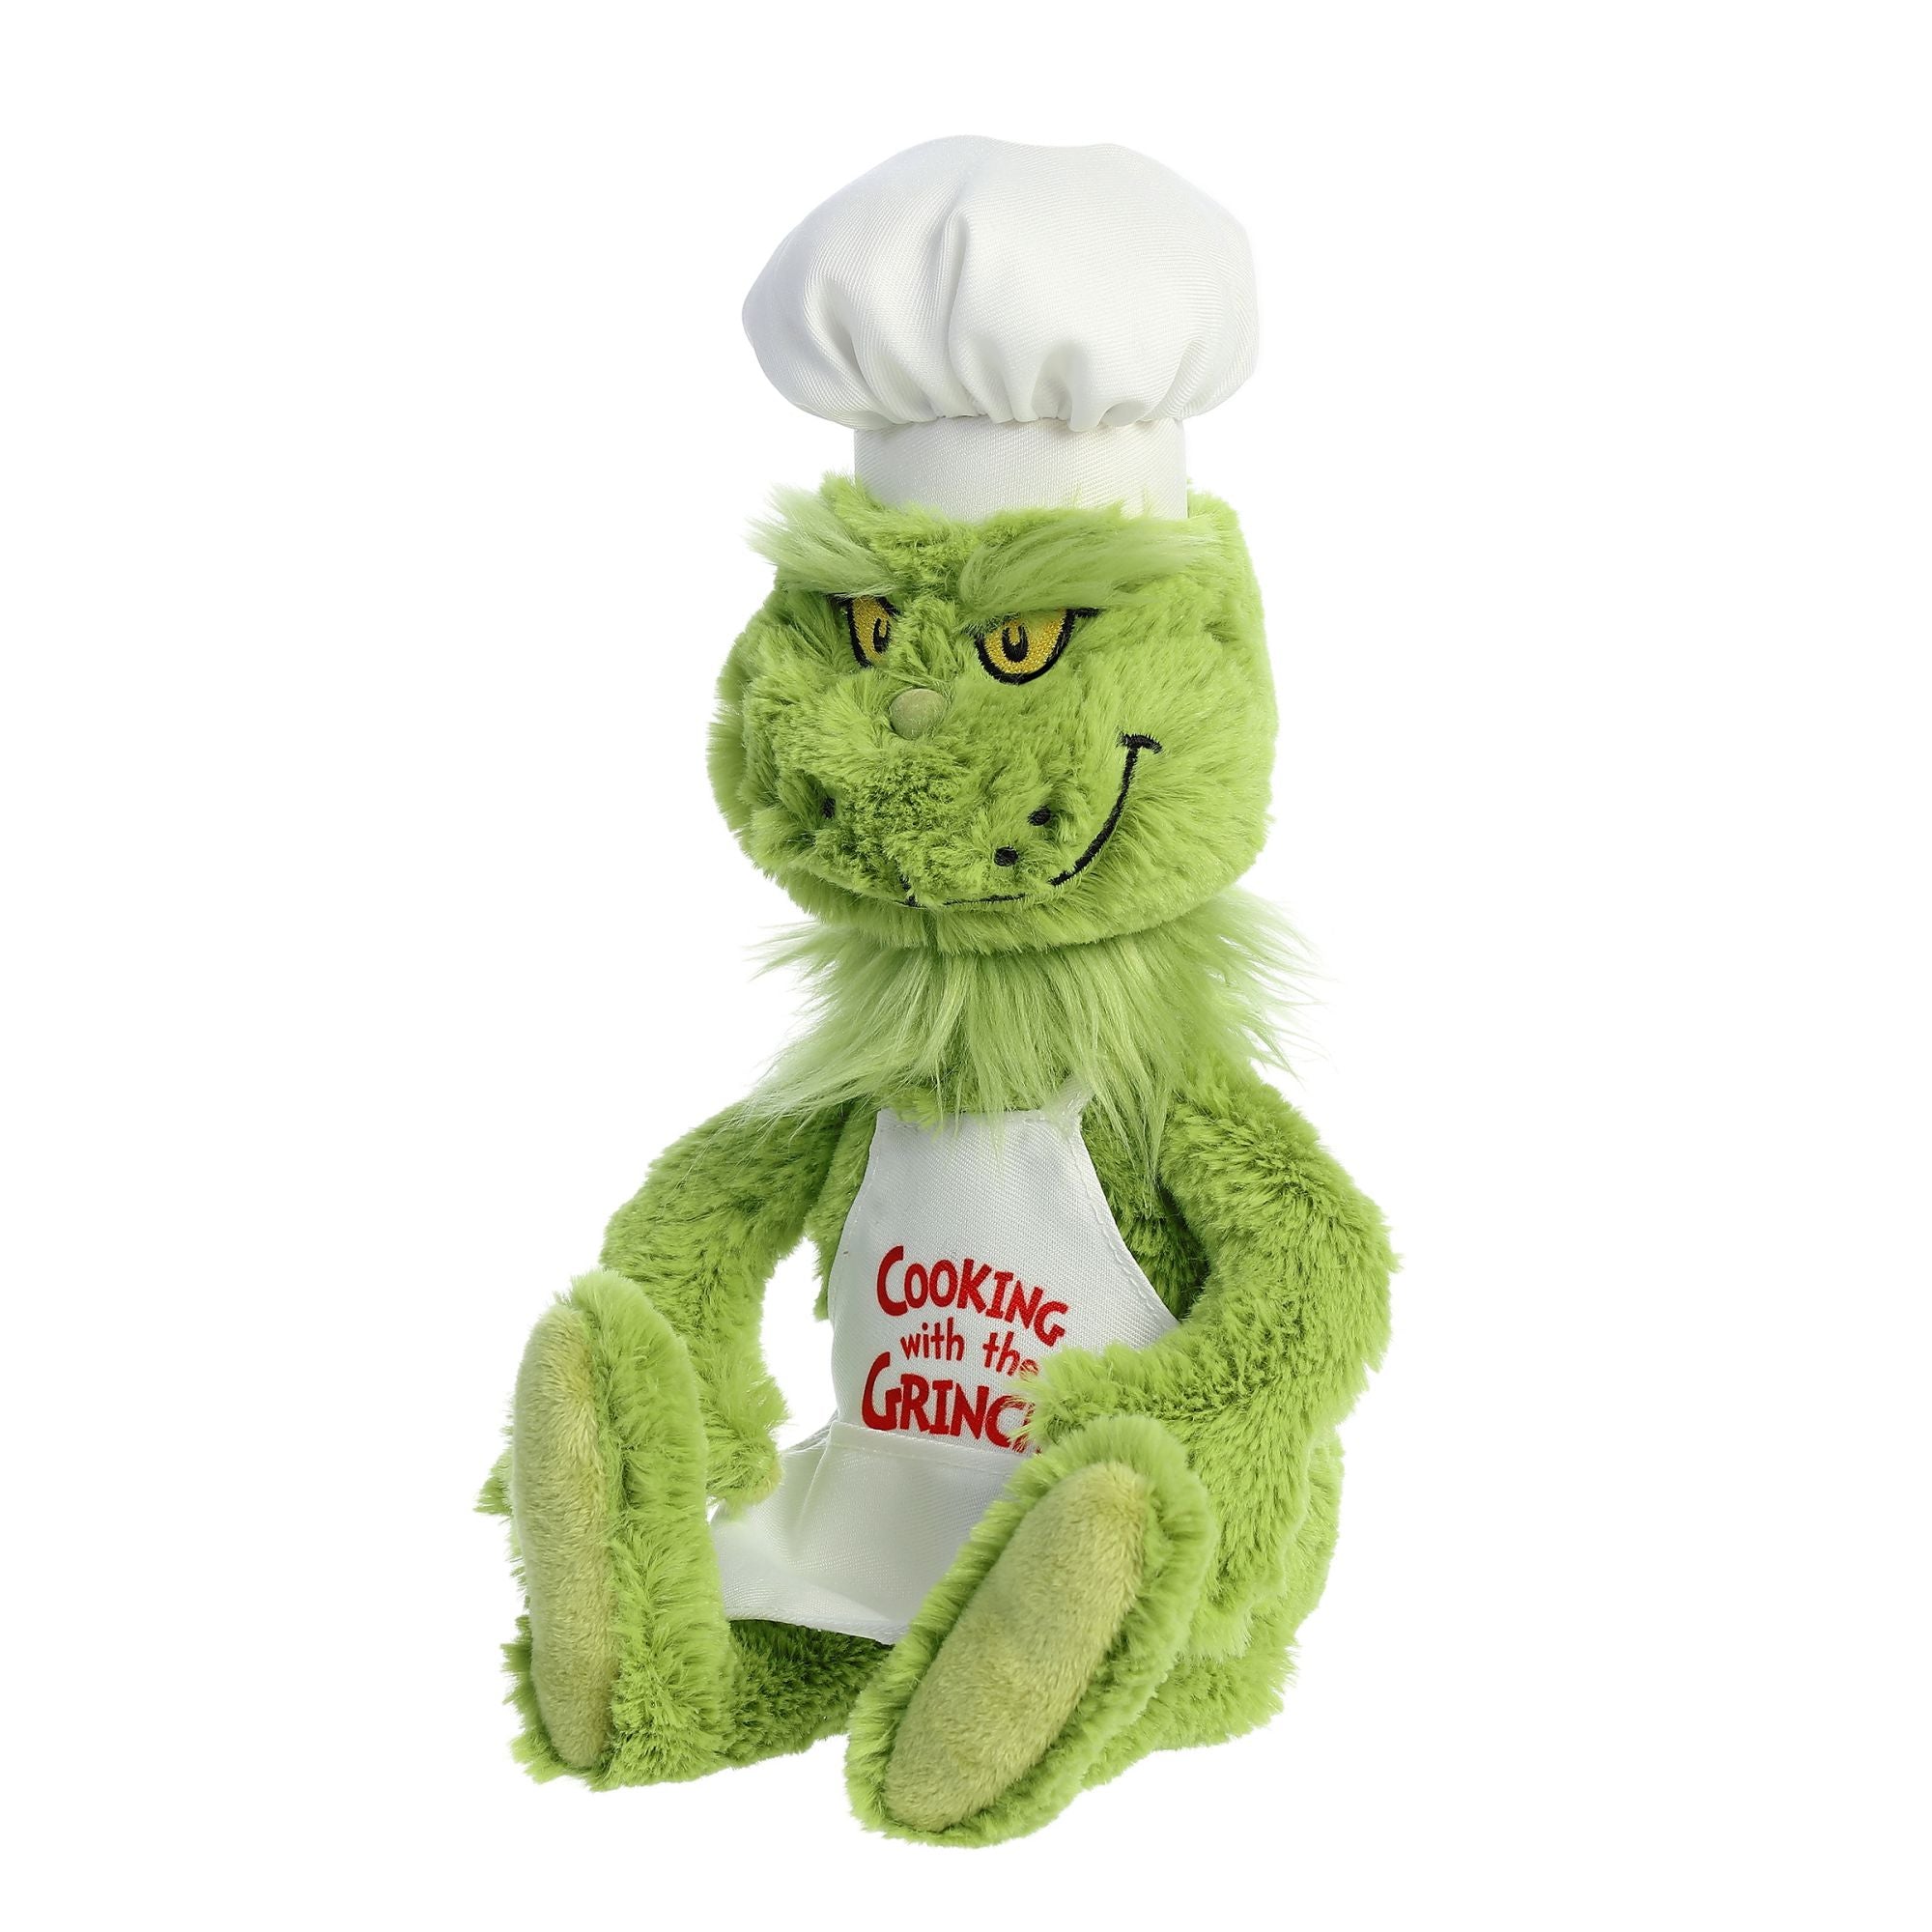  Aurora® Whimsical Dr. Seuss™ Chef Grinch Stuffed